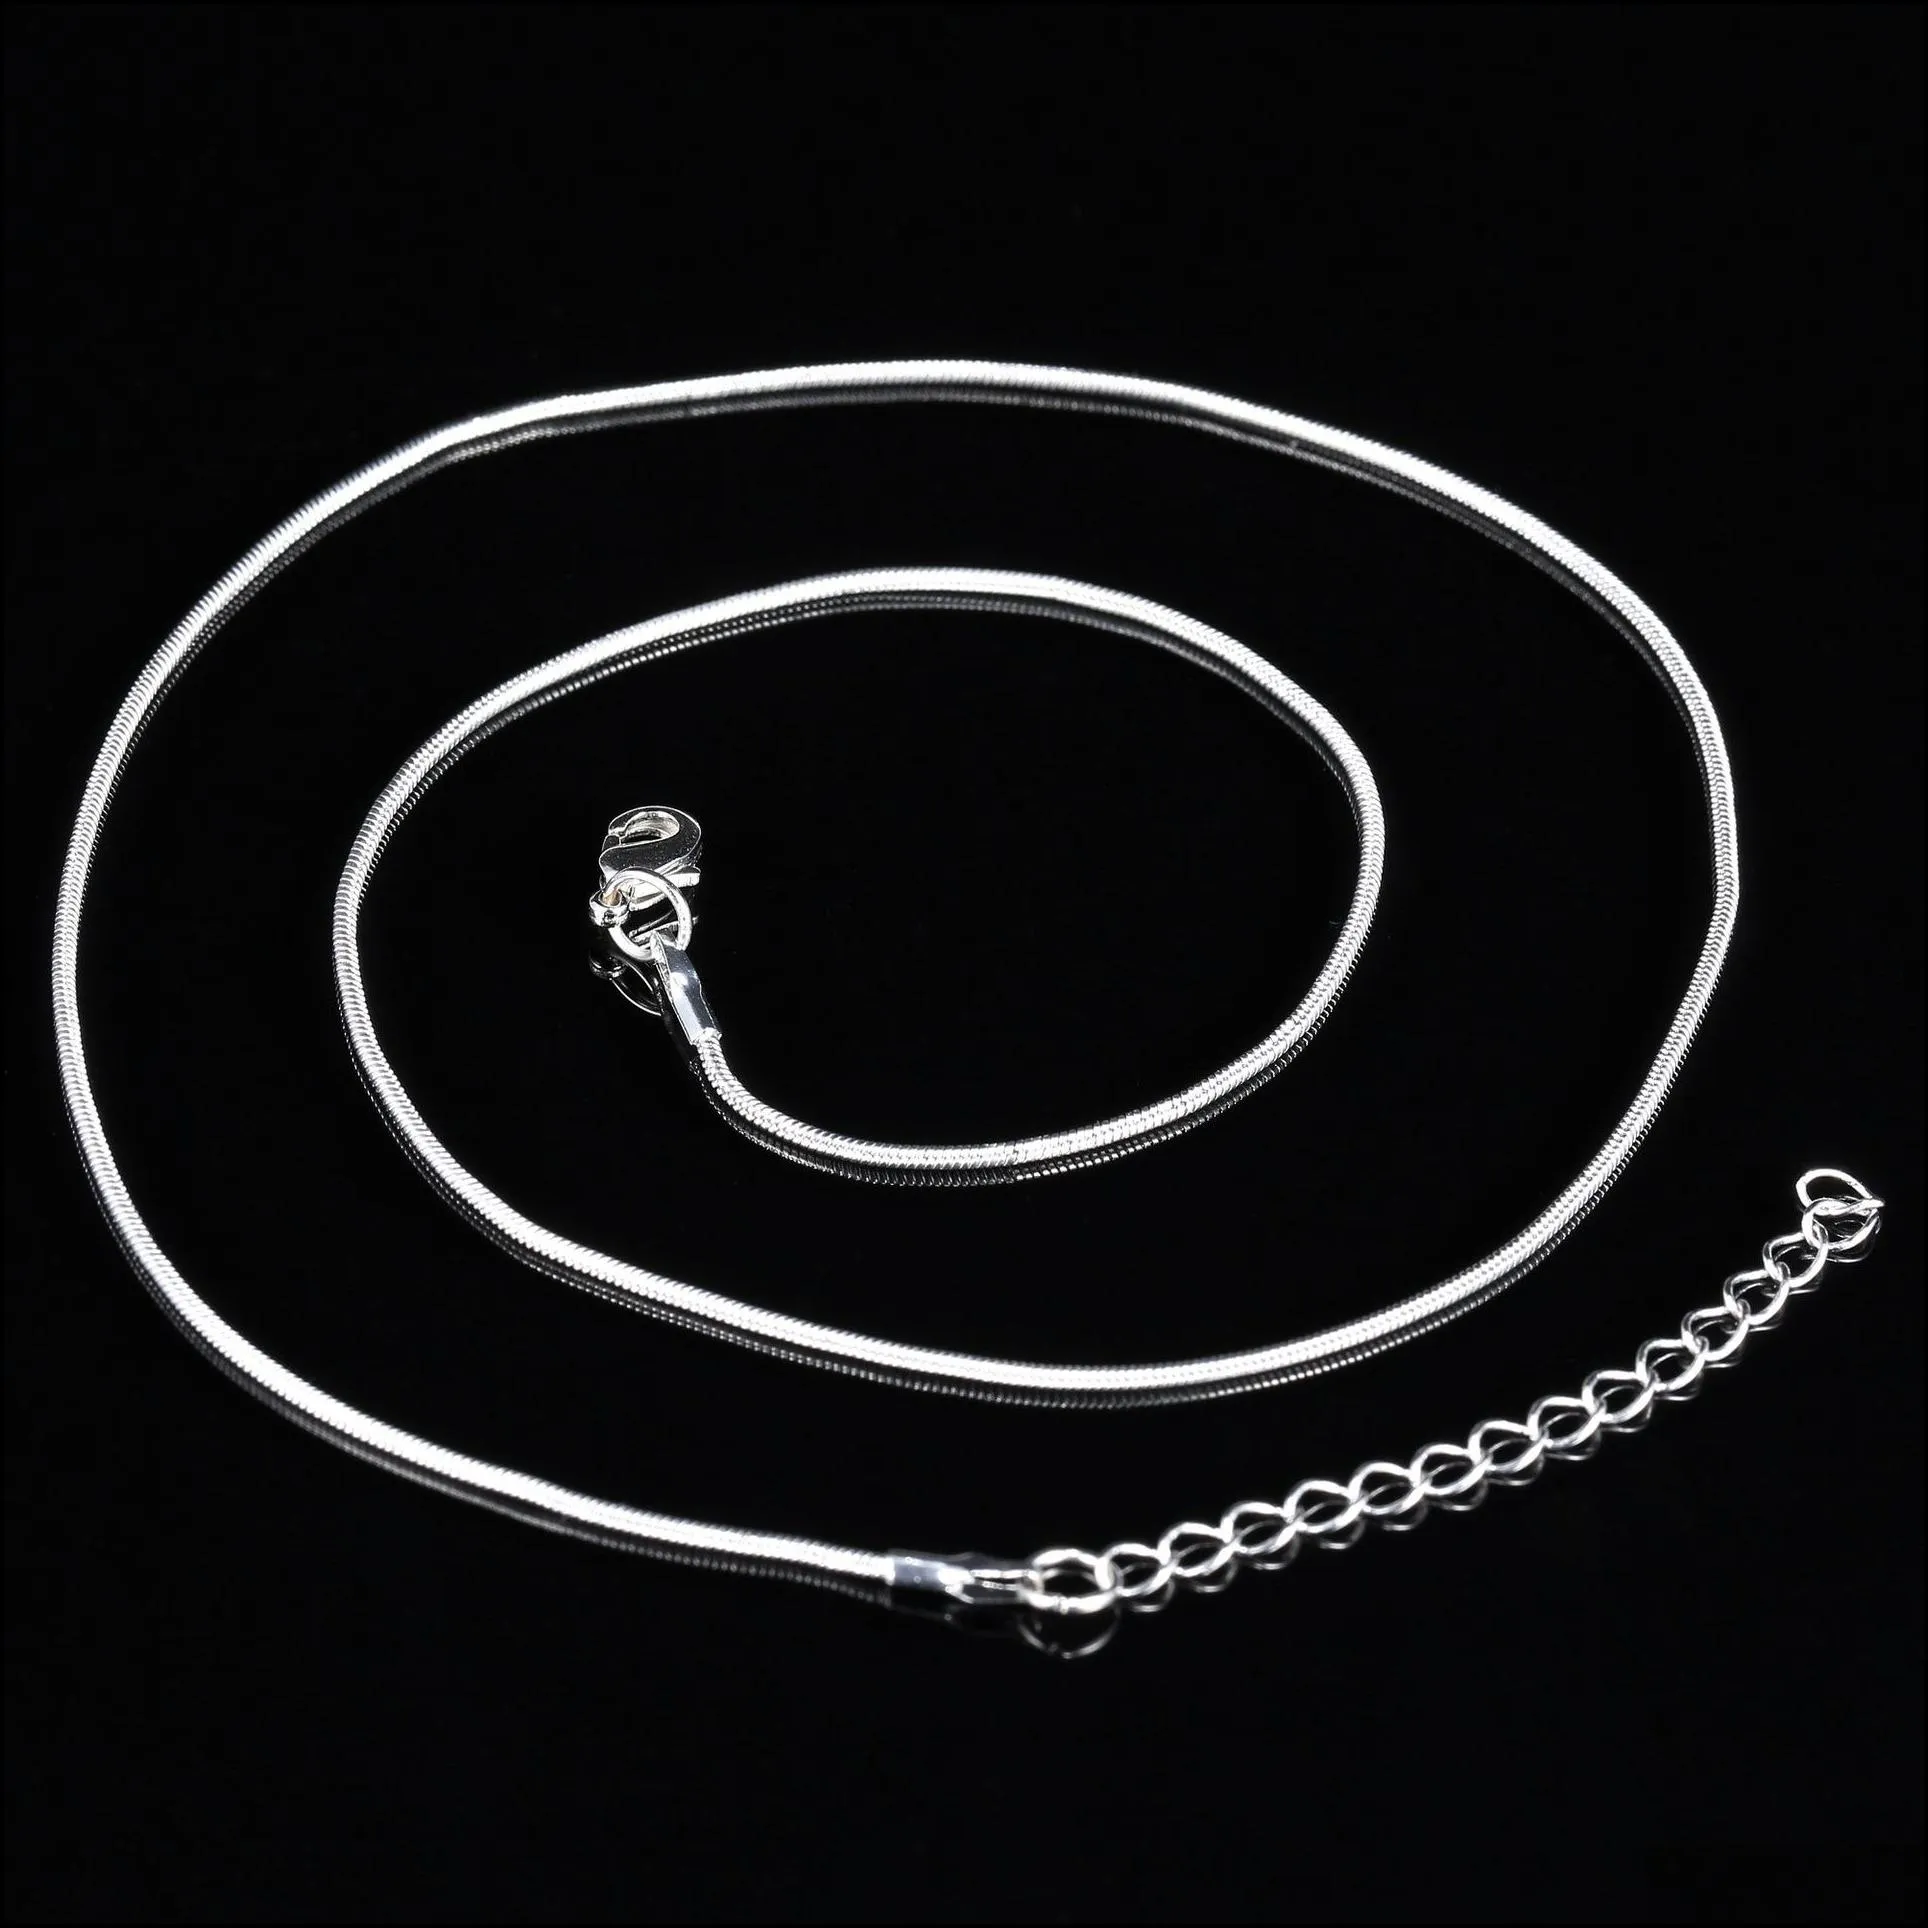 Pendant Necklaces Pendant Necklace Women Fashion Cute Black White Cats Chain Gifts Necklaces Drop Delivery Jewelry Necklaces Pendants Dhs5Q